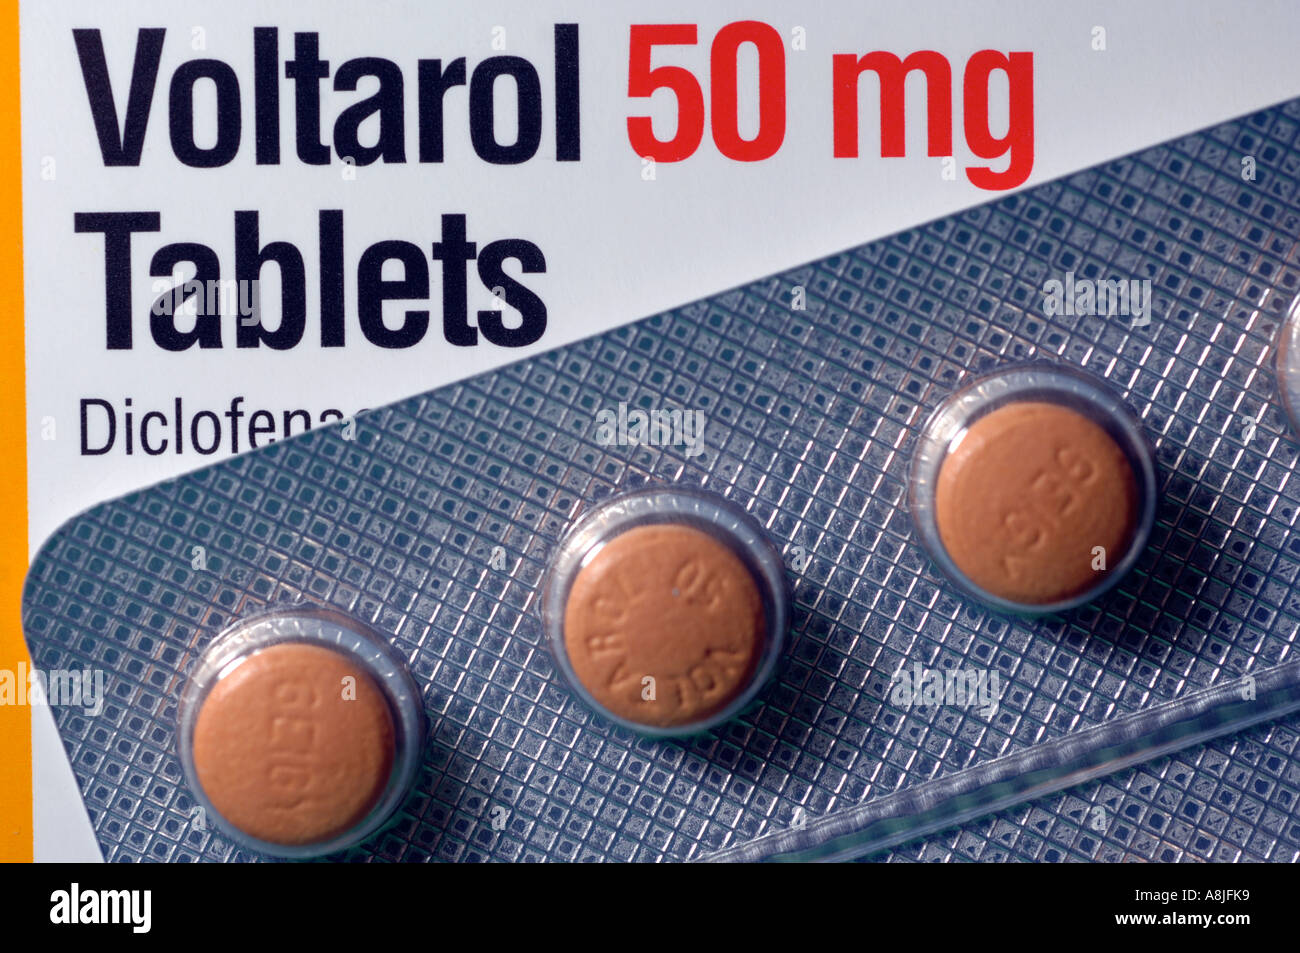 Voltarol tablets Stock Photo